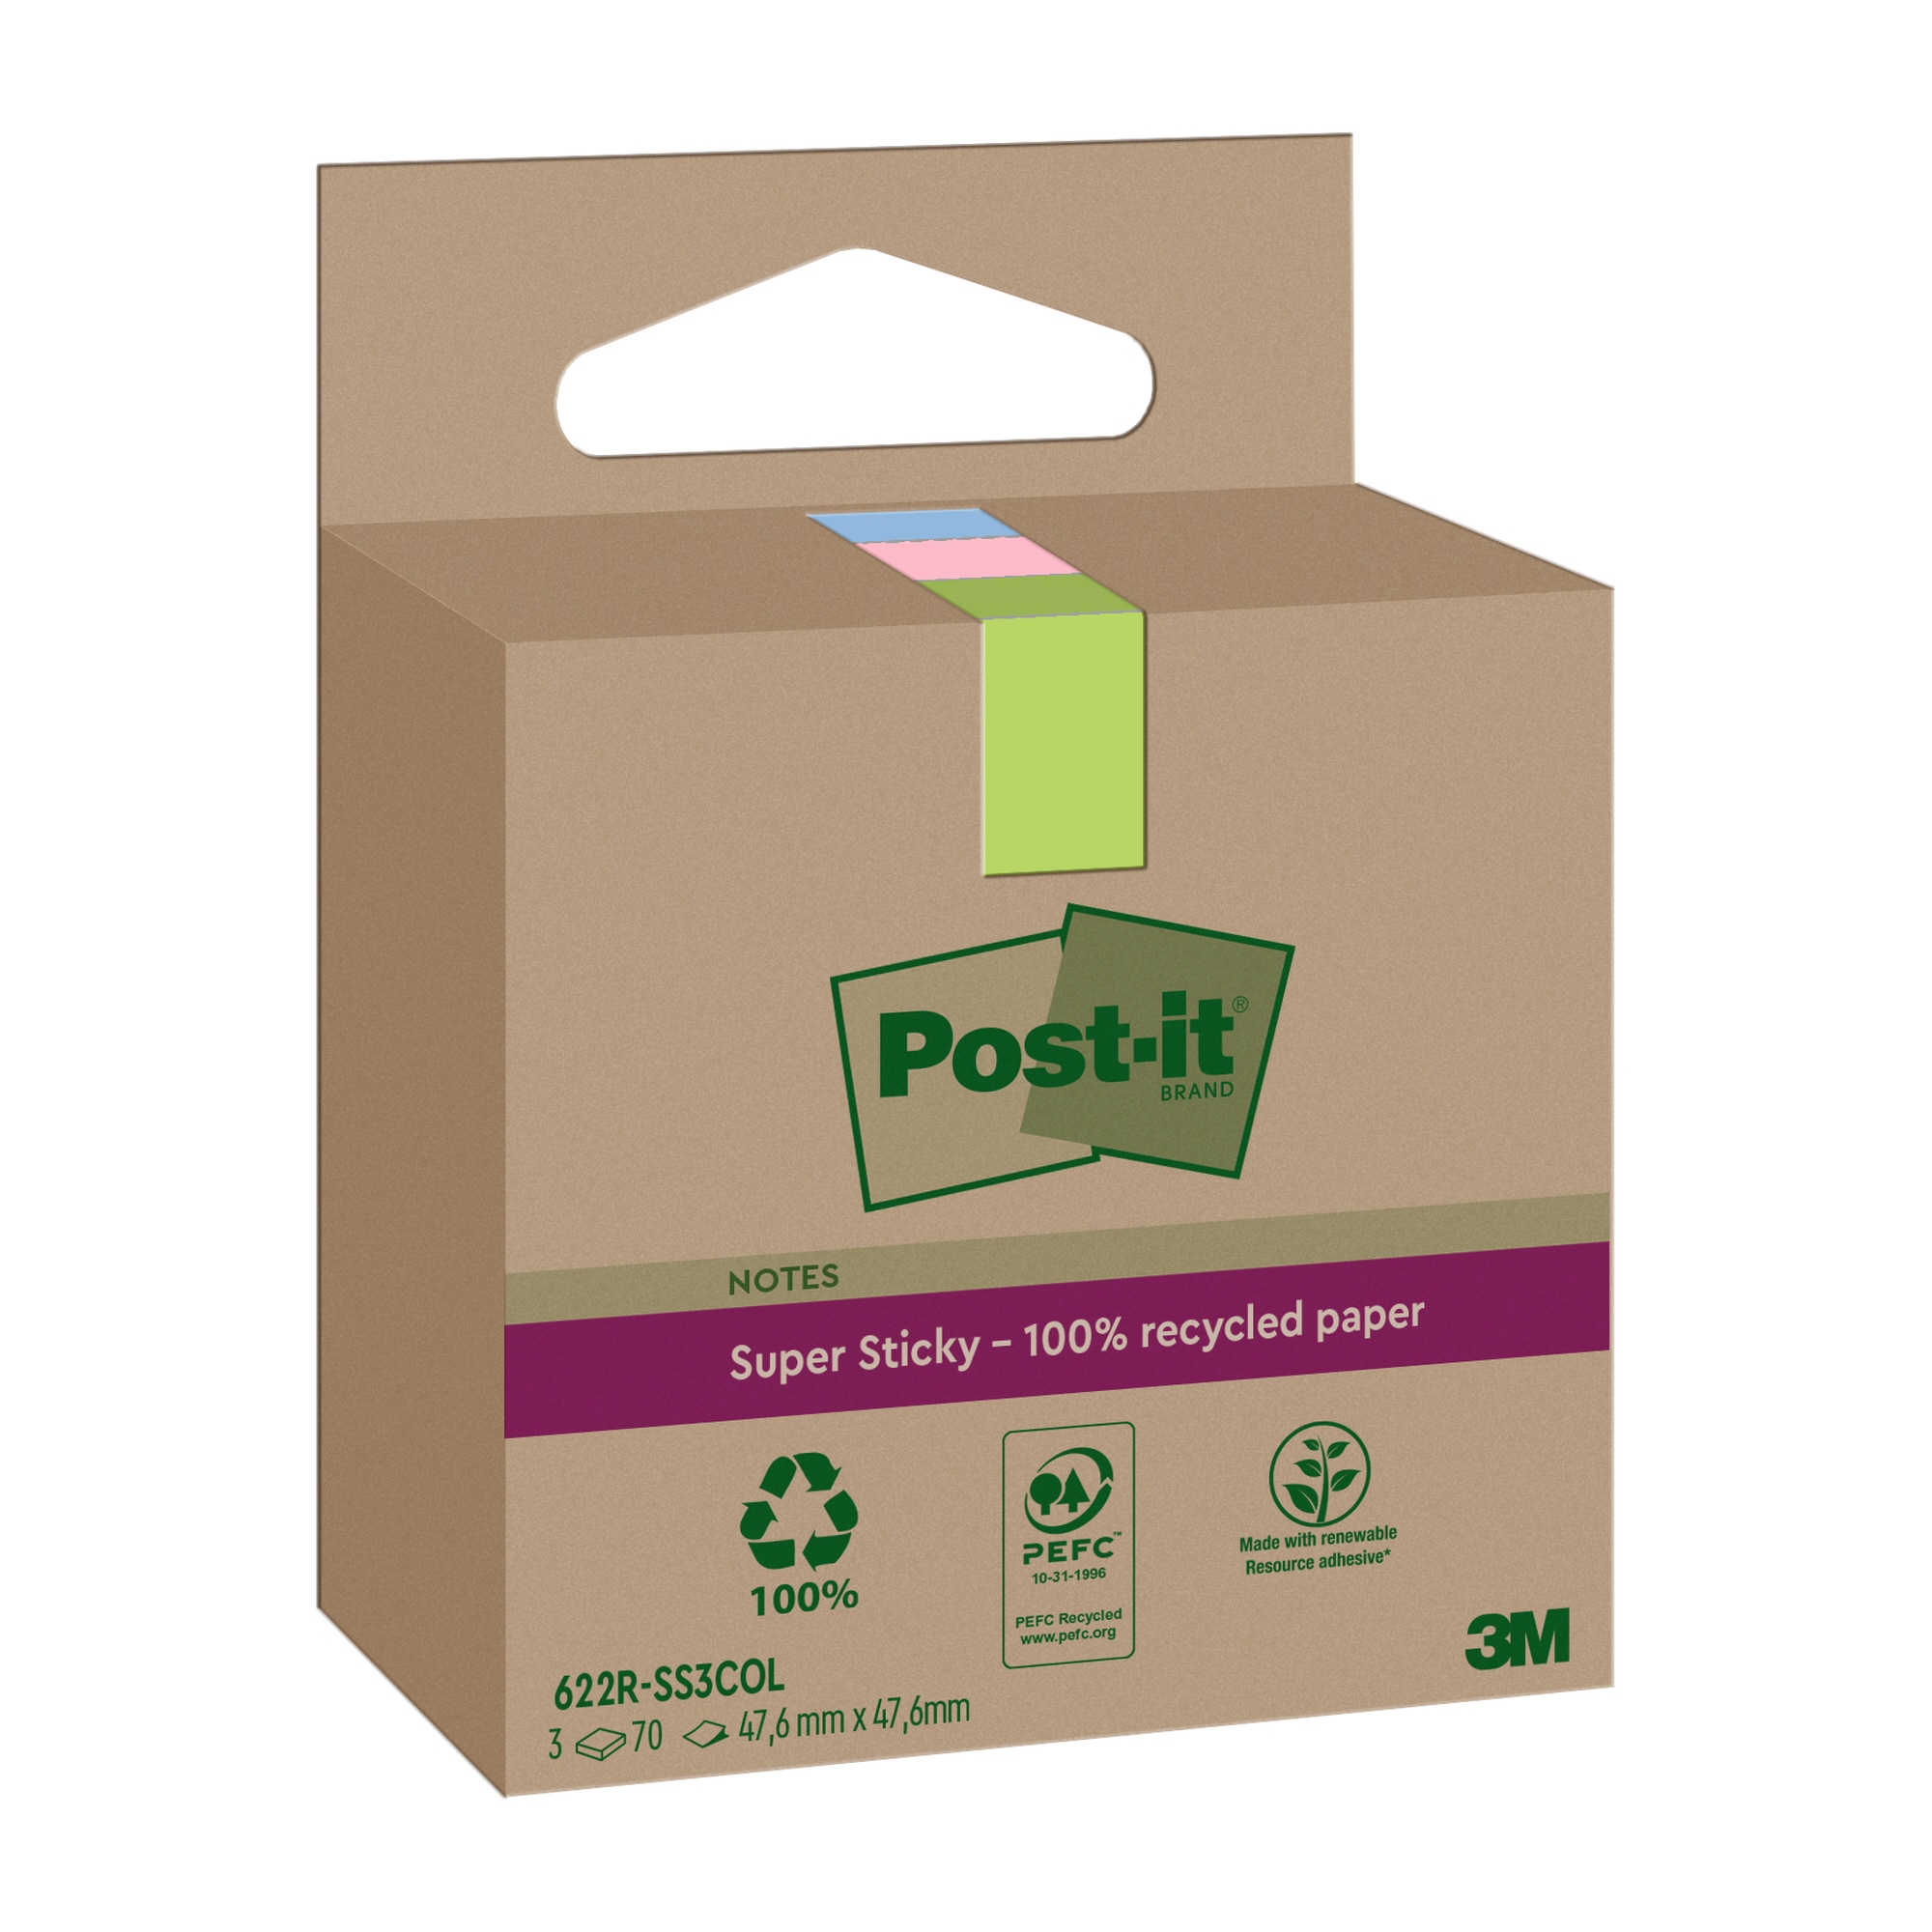 Post-it® Haftnotiz Super Sticky Recycling Notes 47,6x 47,6mm farbig 3 Block/Pack.